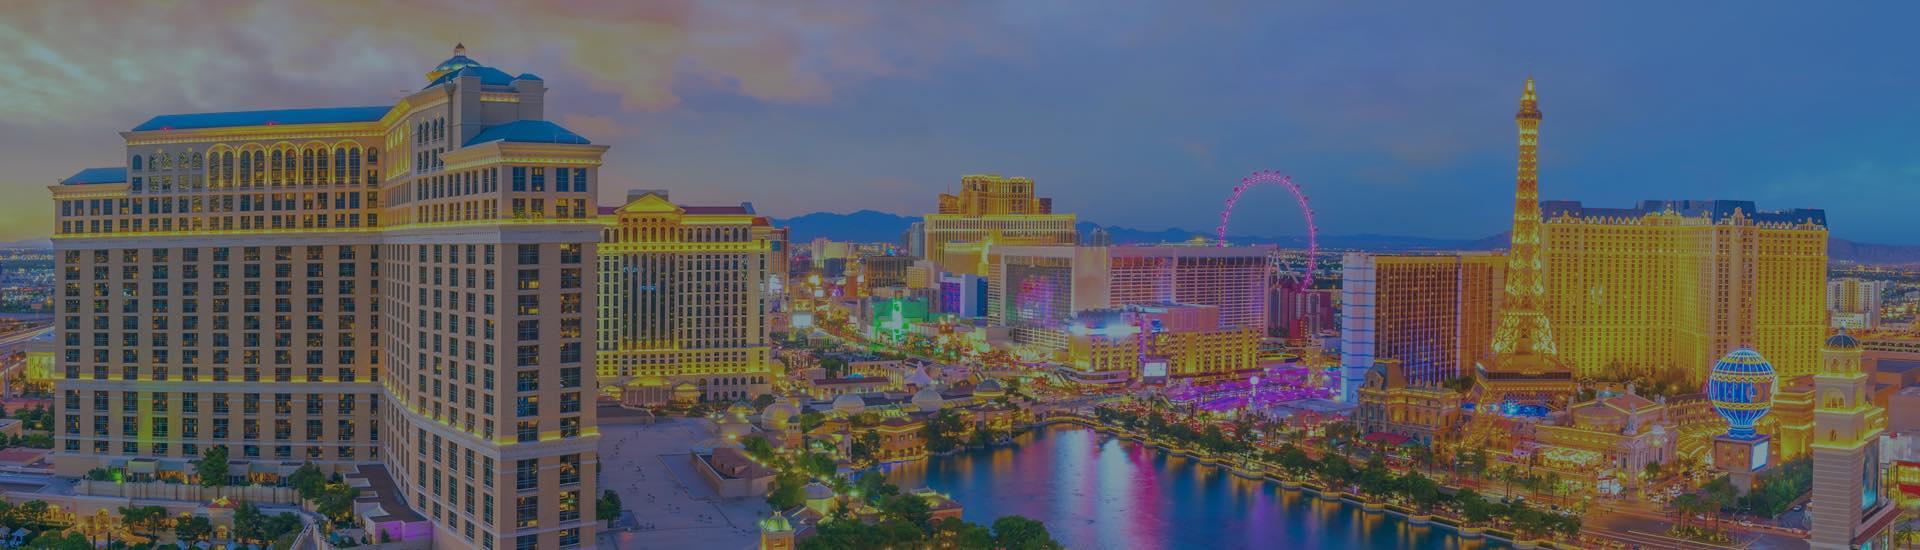 Find the Best Hotels in Las Vegas